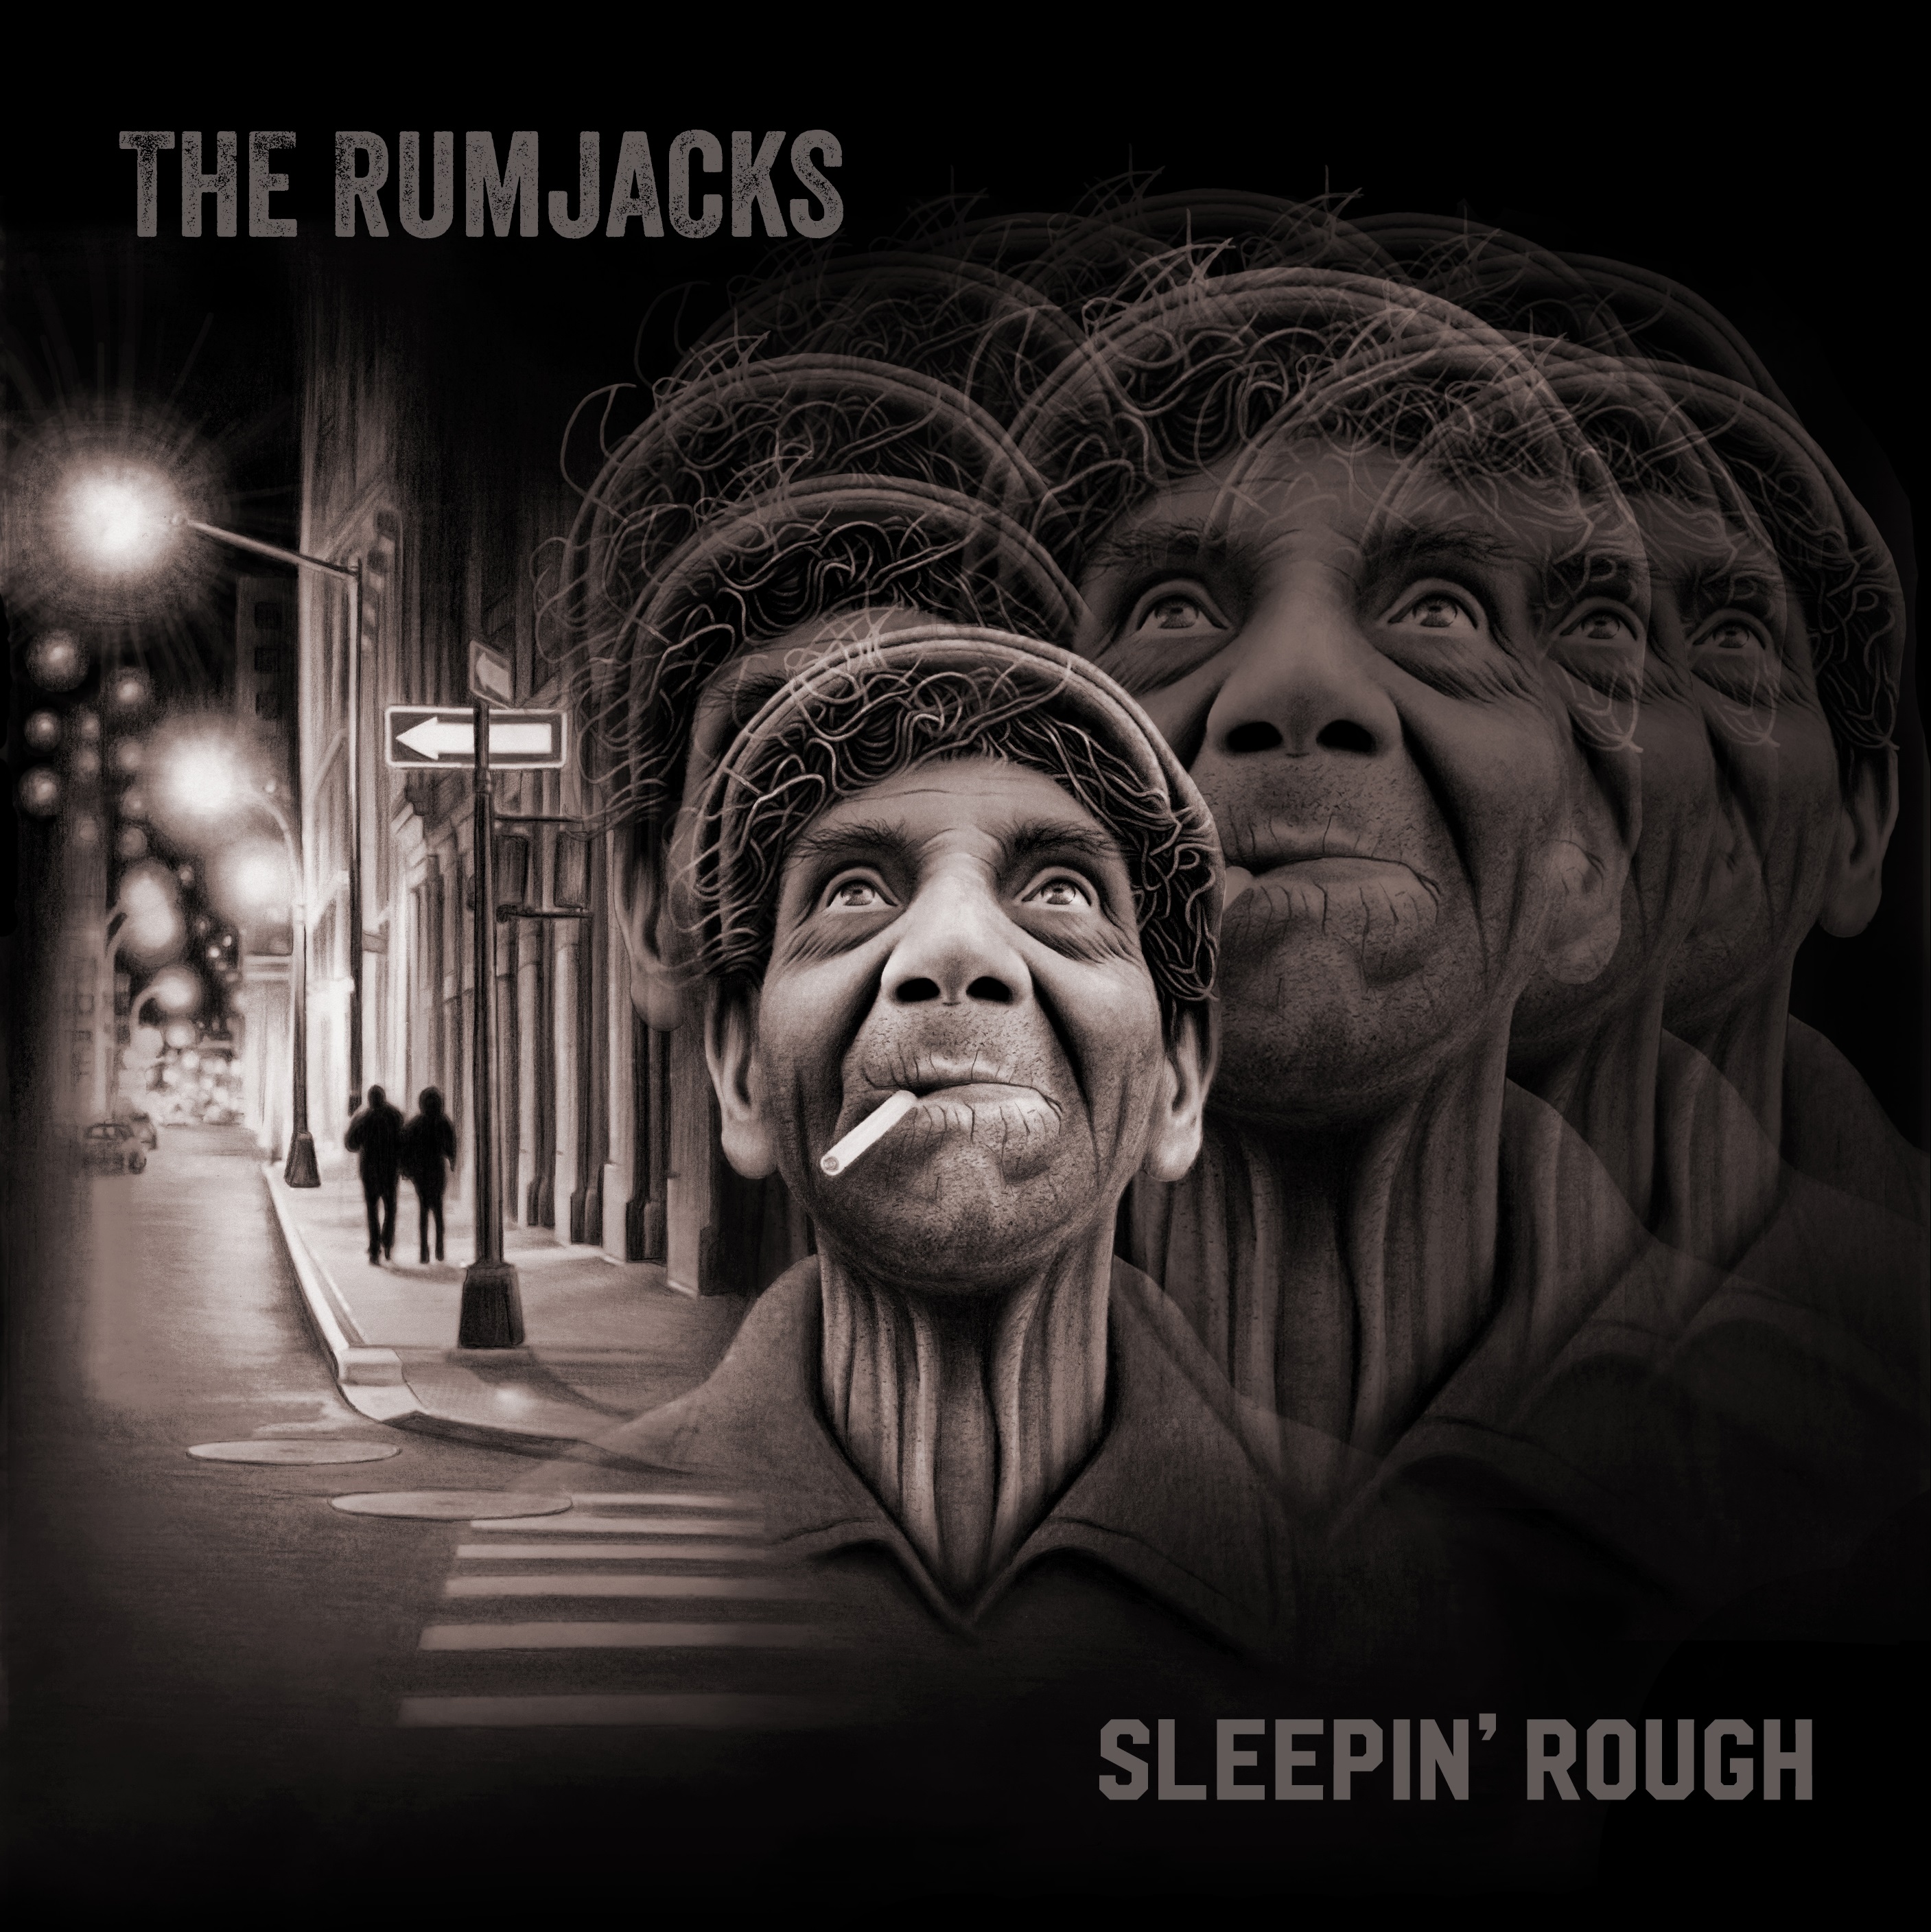 THE RUMJACKS: “SLEEPIN’ ROUGH”